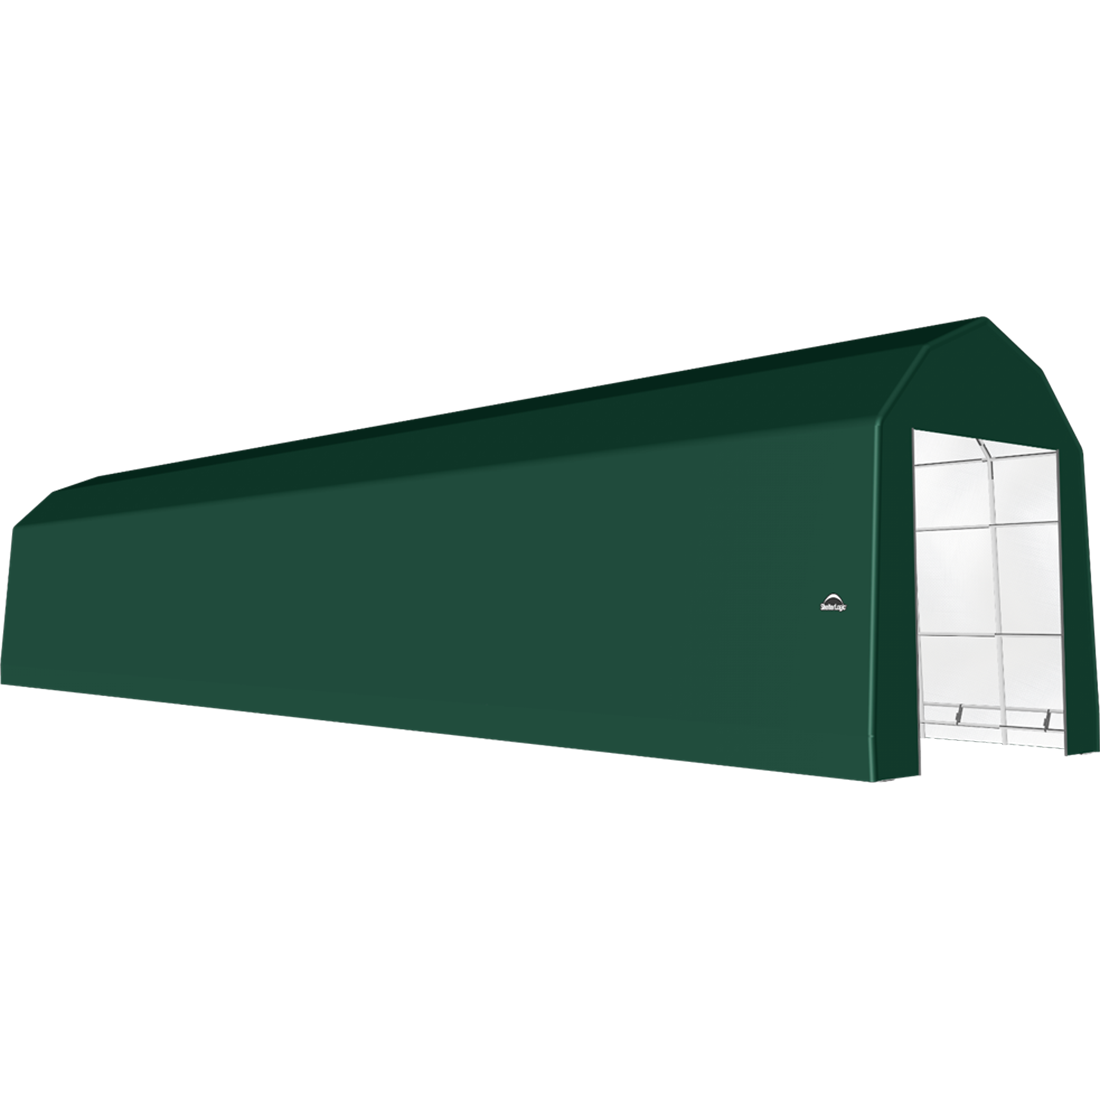 ShelterTech SP Series Barn Shelter, 15 ft. x 88 ft. x 17 ft. Heavy Duty PVC 14.5 oz. Green